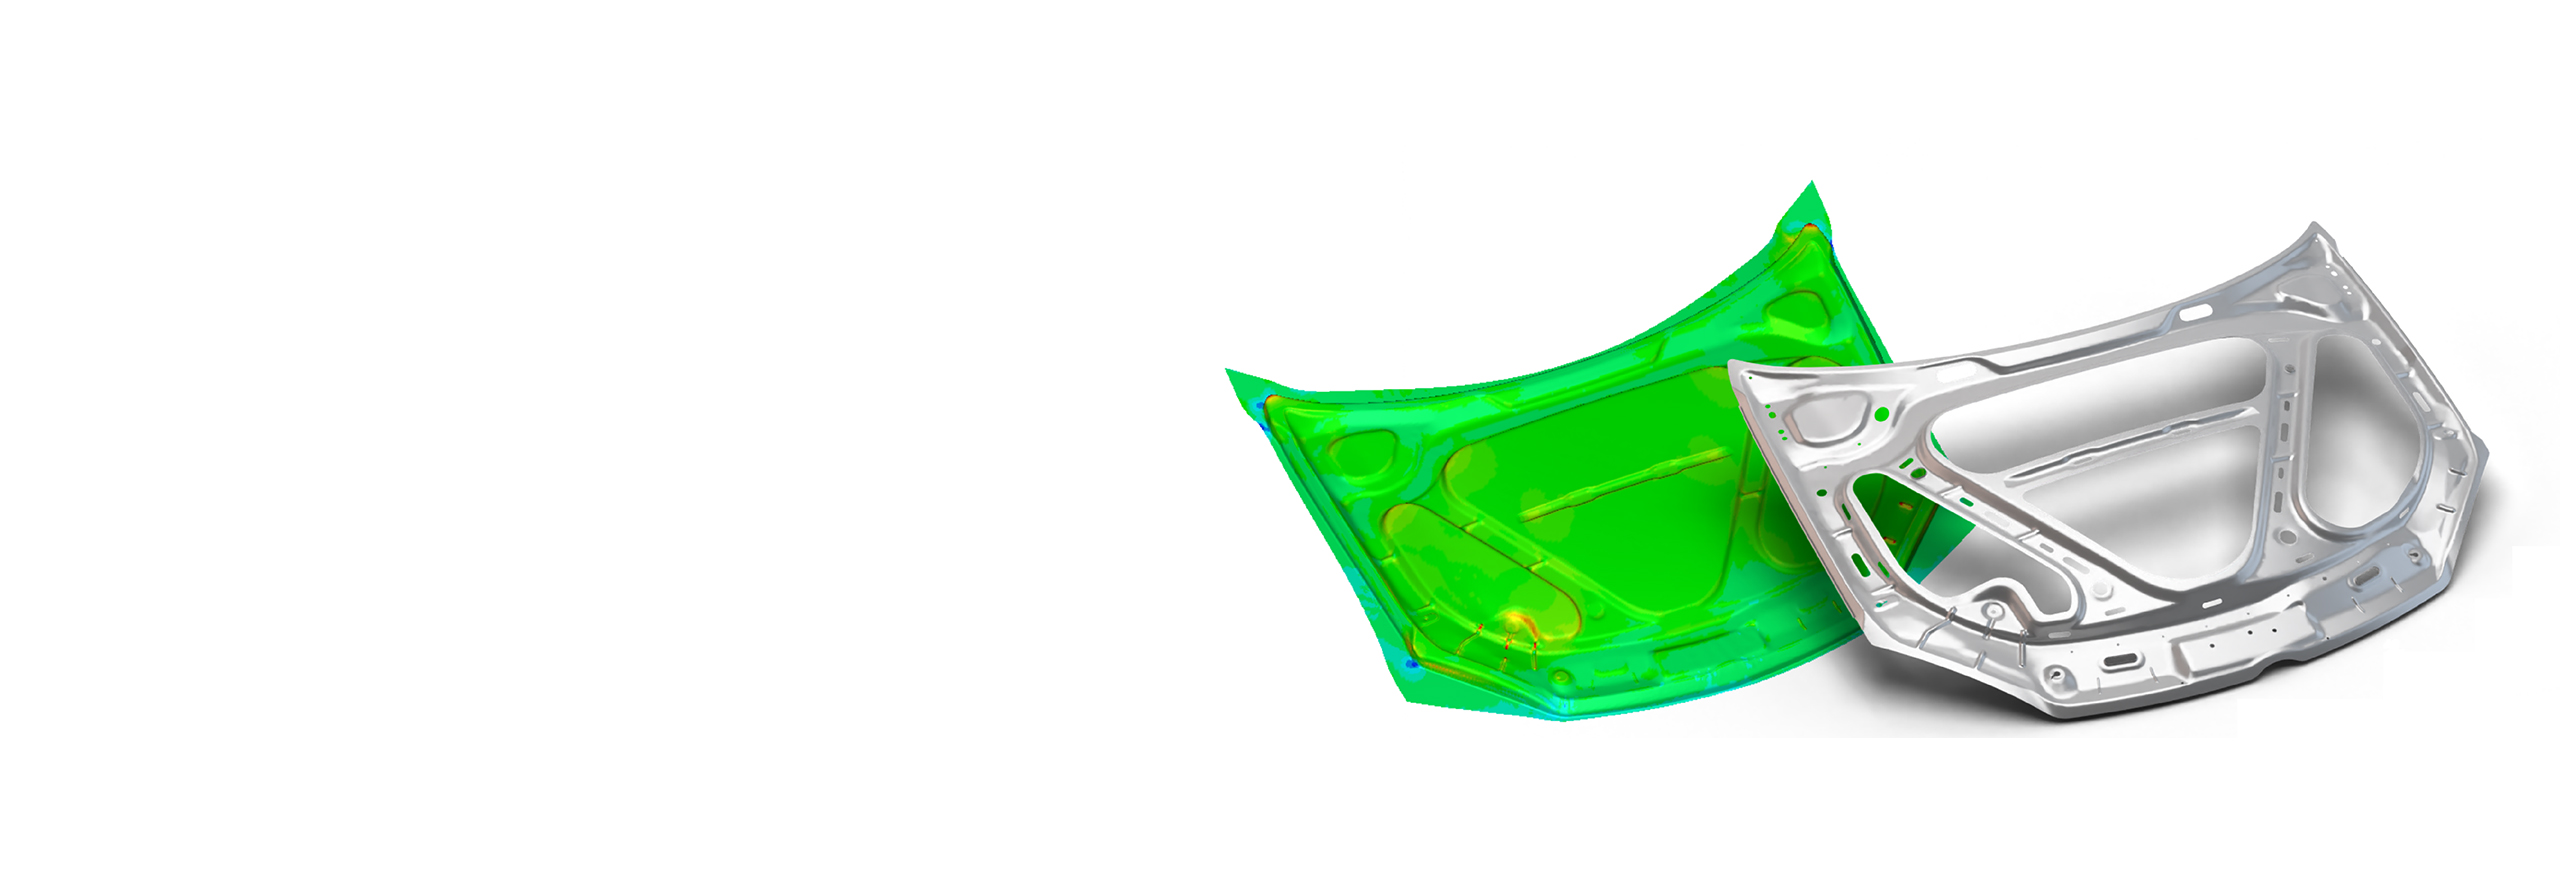 FTI FASTIncremental sheet metal analysis software simulation of auto car parts